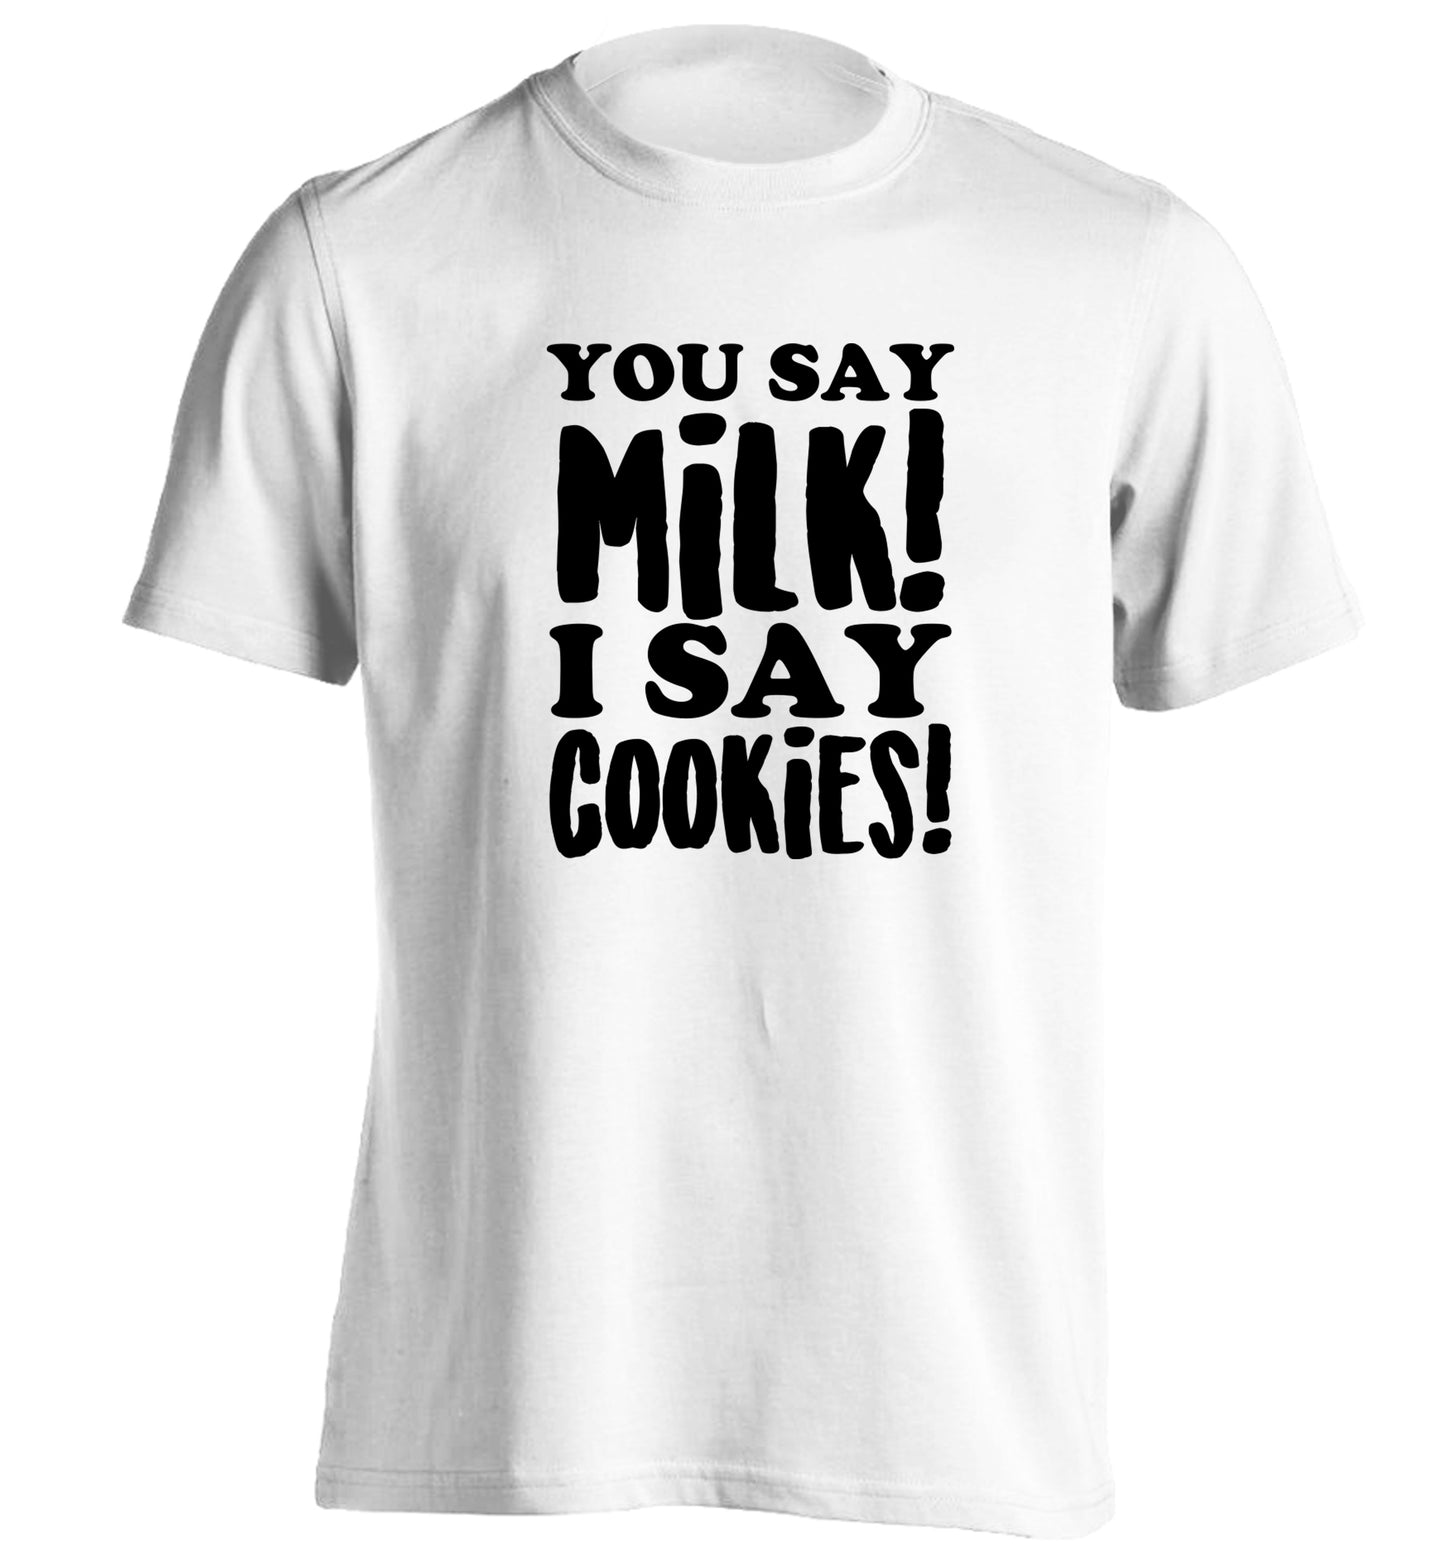 You say milk I say cookies! adults unisex white Tshirt 2XL